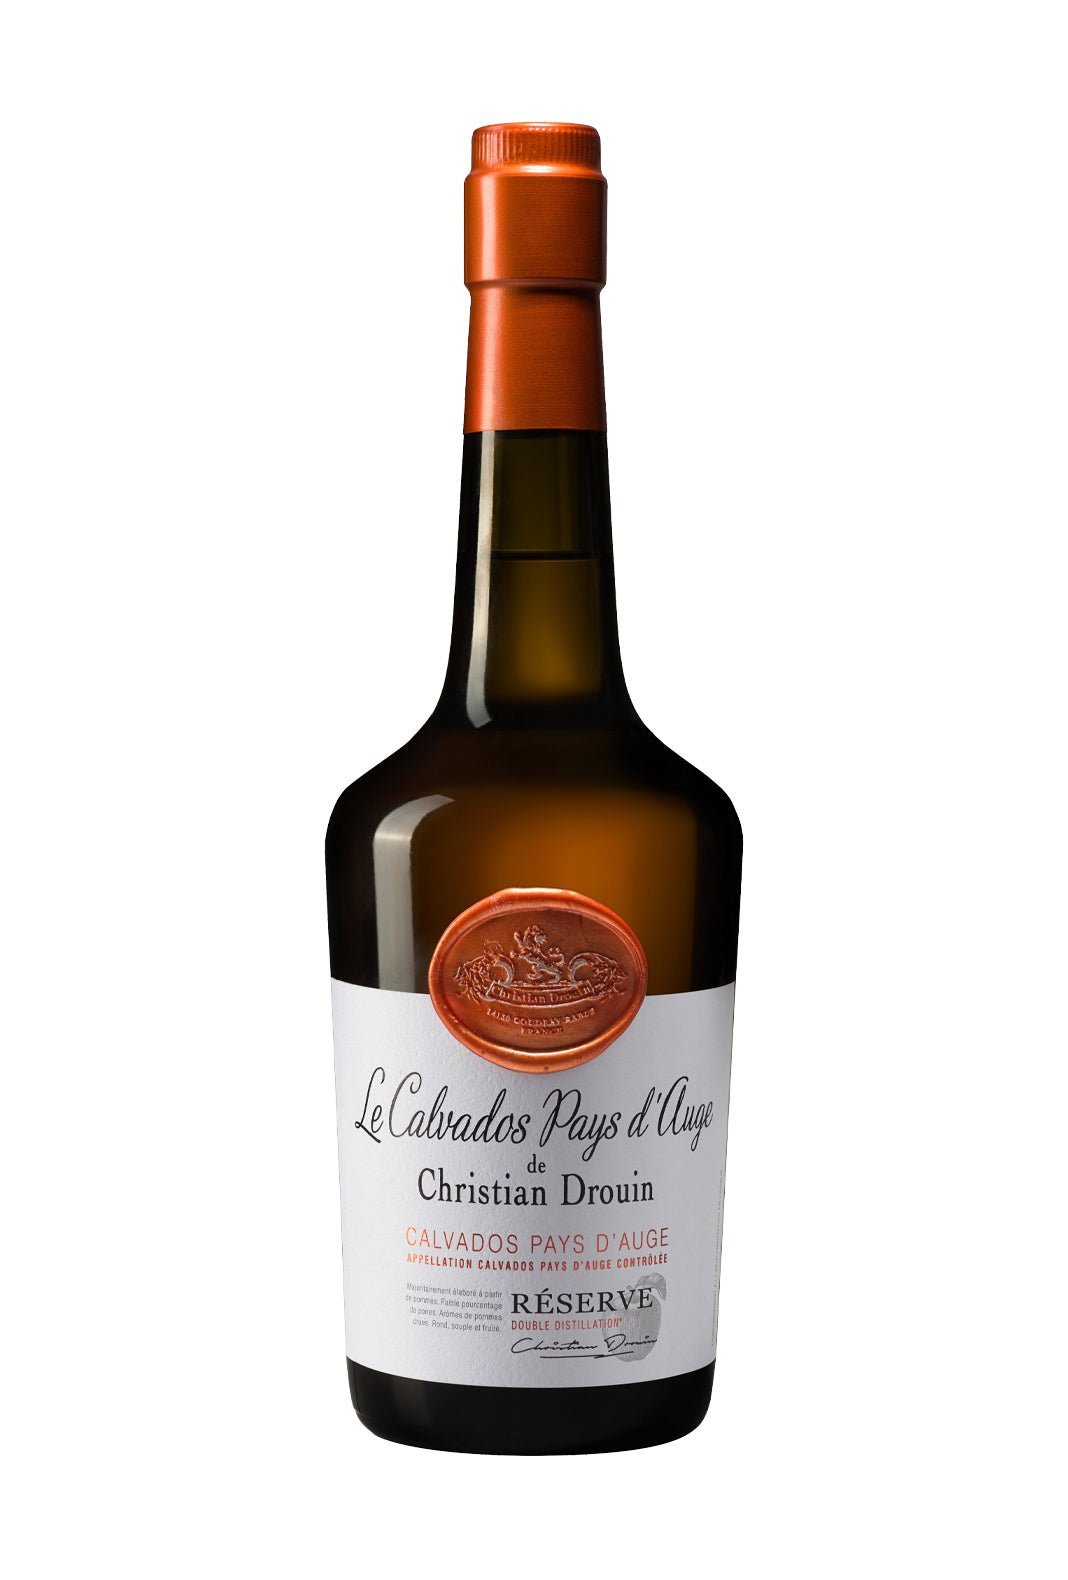 Christian Drouin Reserve Calvados 40% 700ml | Brandy | Shop online at Spirits of France